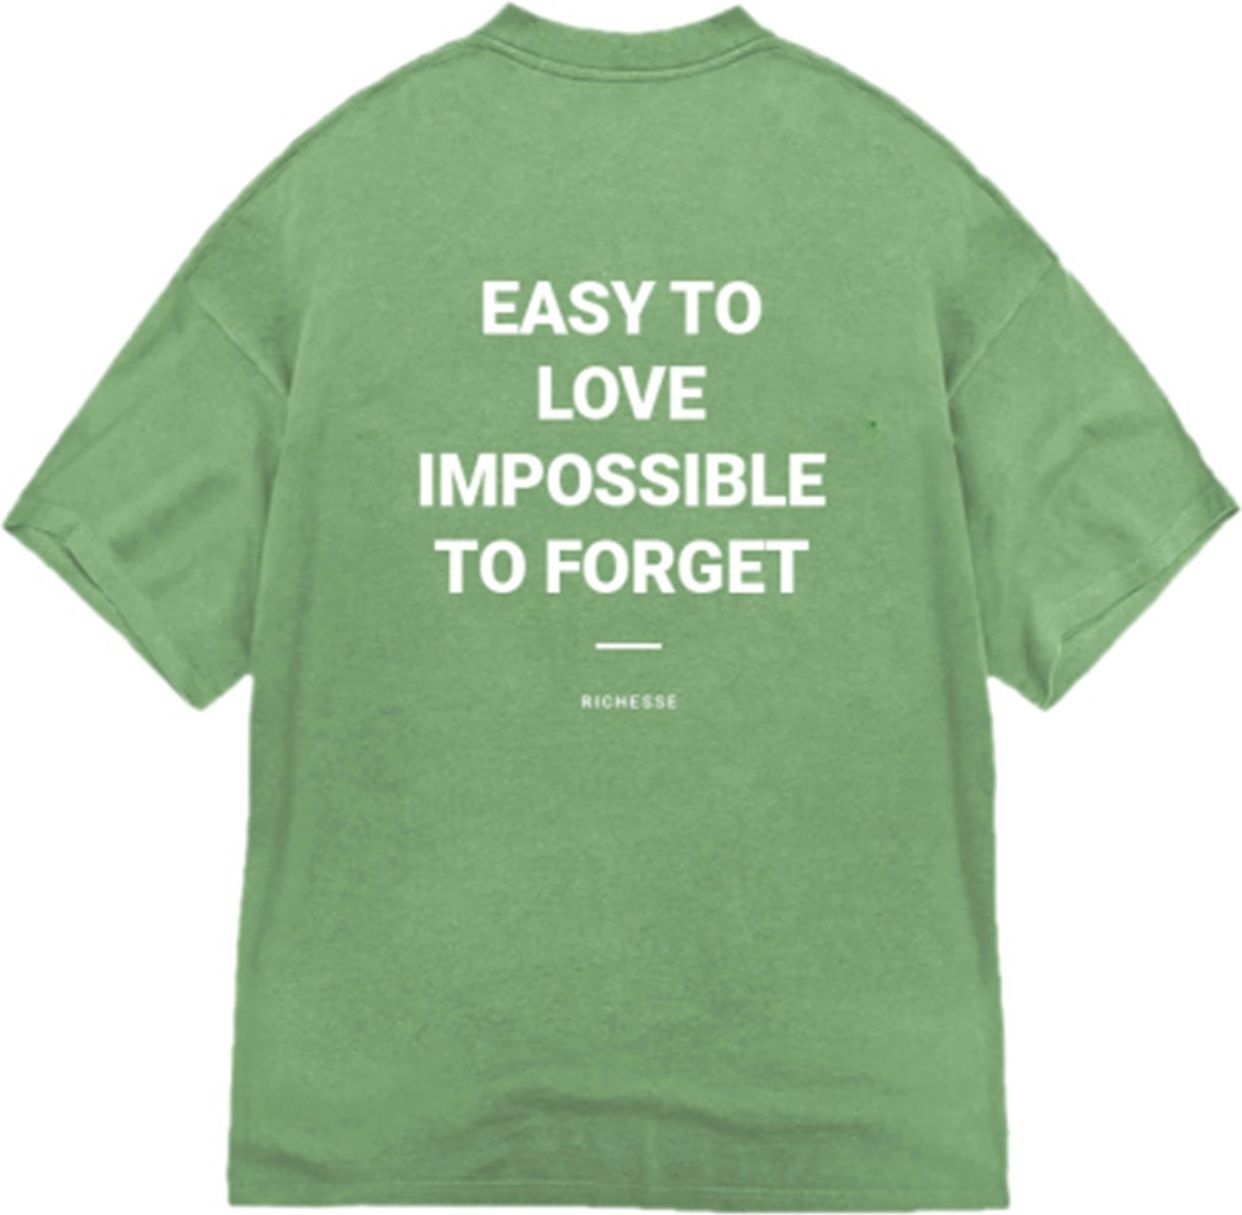 Richesse Unforgettable Groen Shirt Groen